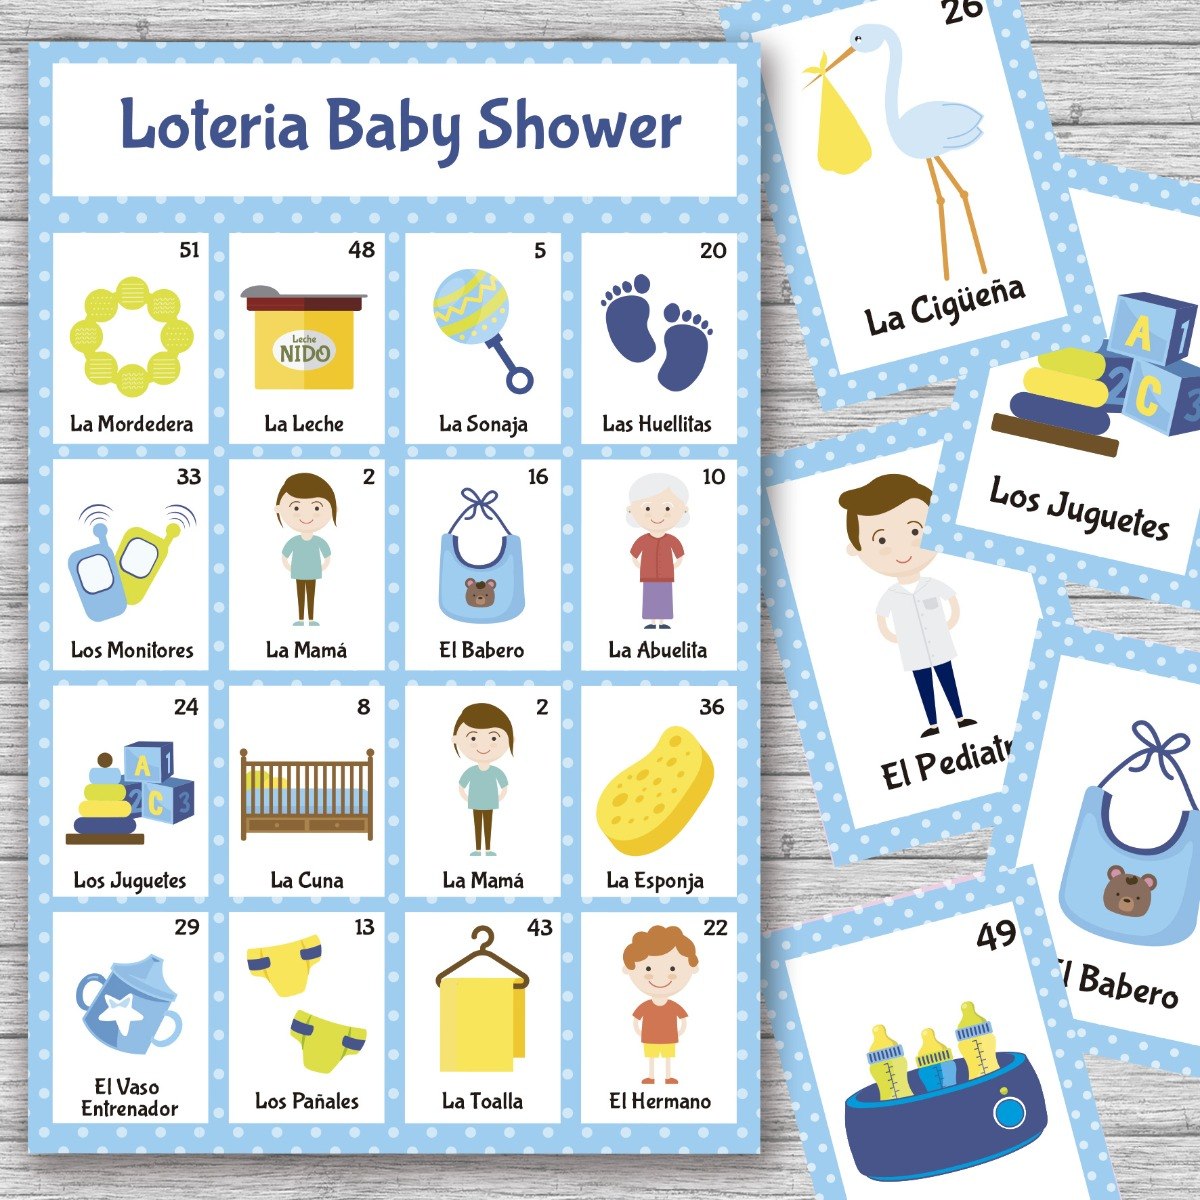 2-juegos-para-baby-shower-loteria-babyshower